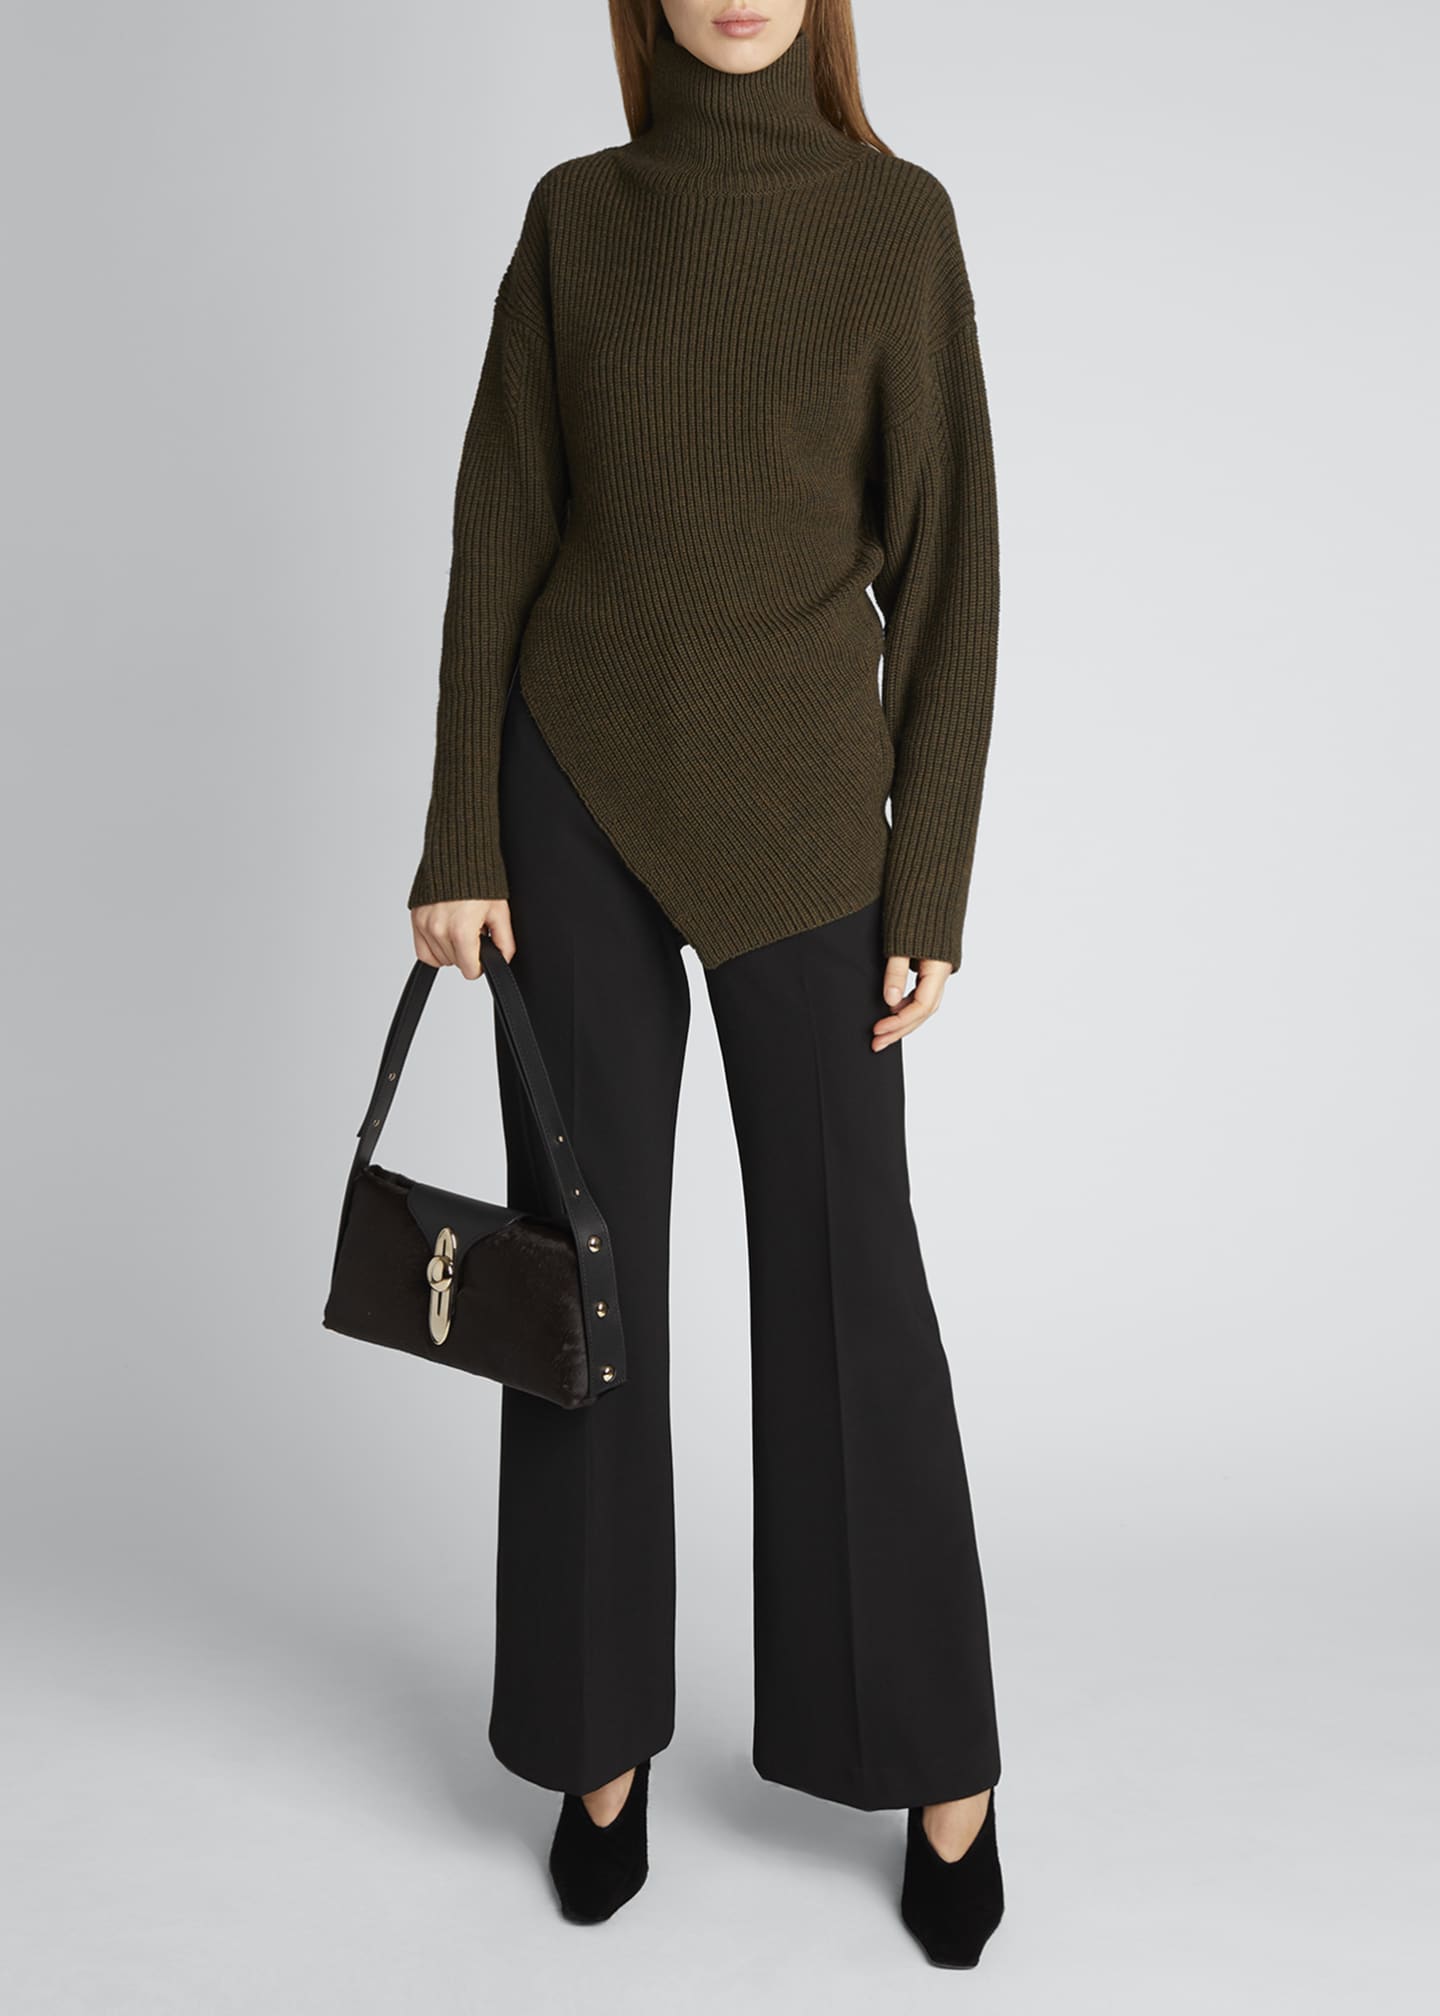 Proenza Schouler Asymmetrical Wool Turtleneck Sweater - Bergdorf Goodman